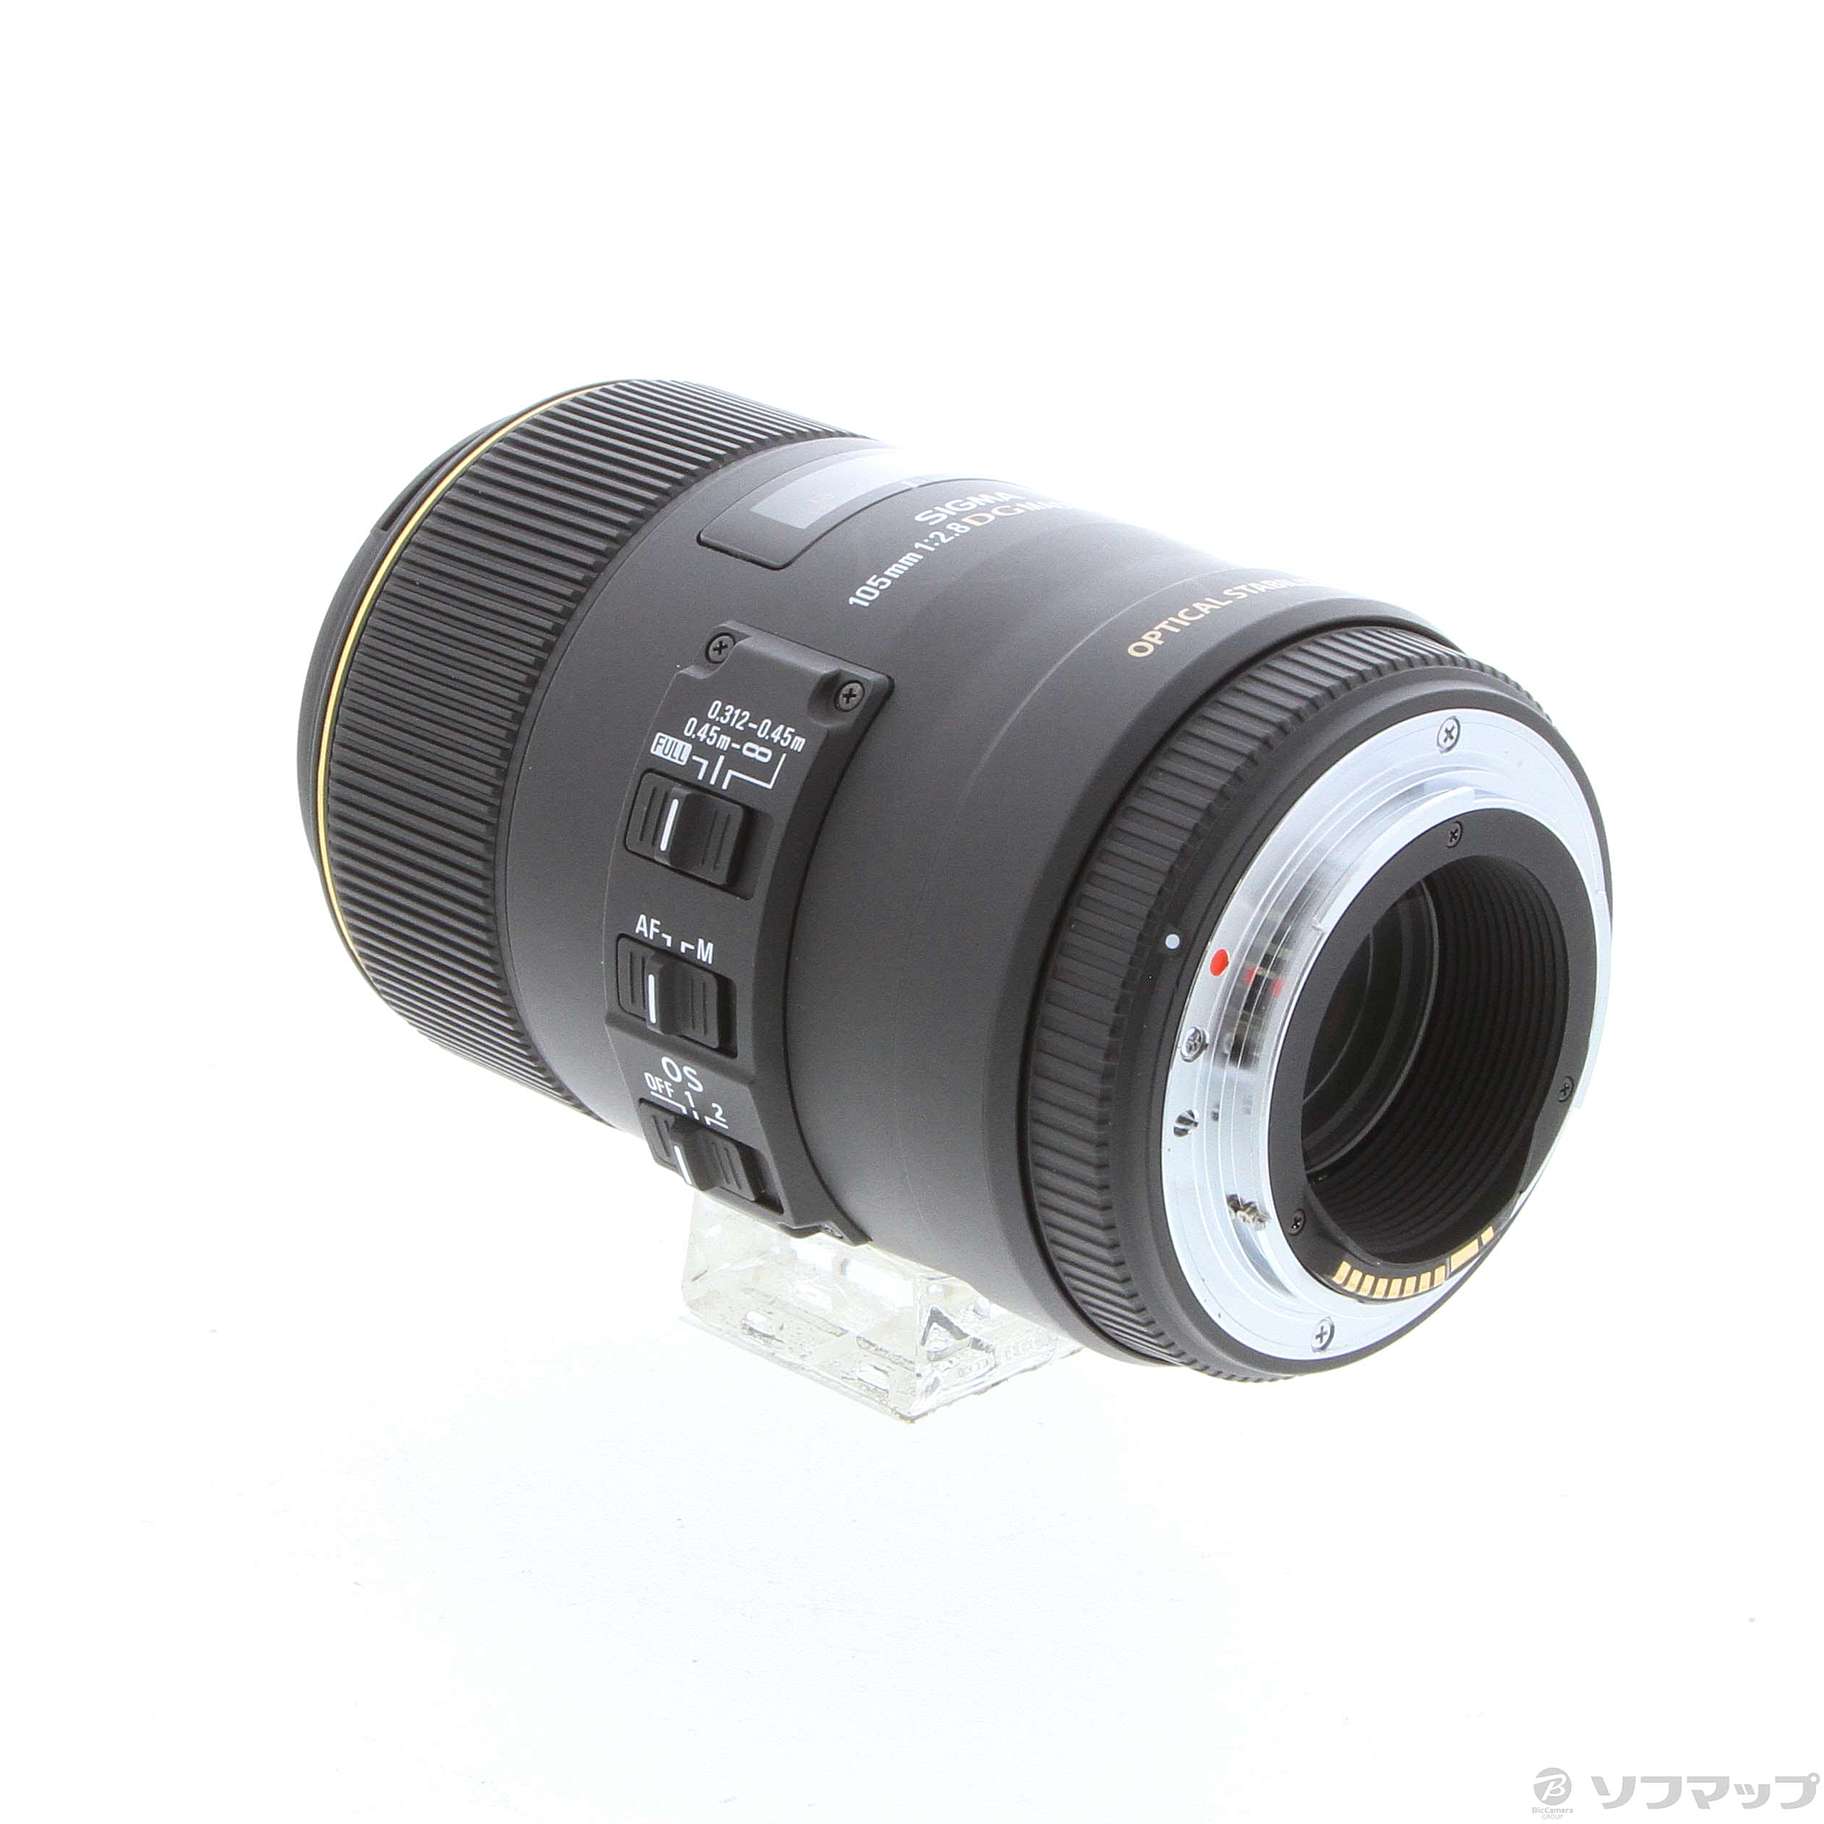 SIGMA 105mm f2.8 ex macro (キヤノン用) - レンズ(単焦点)